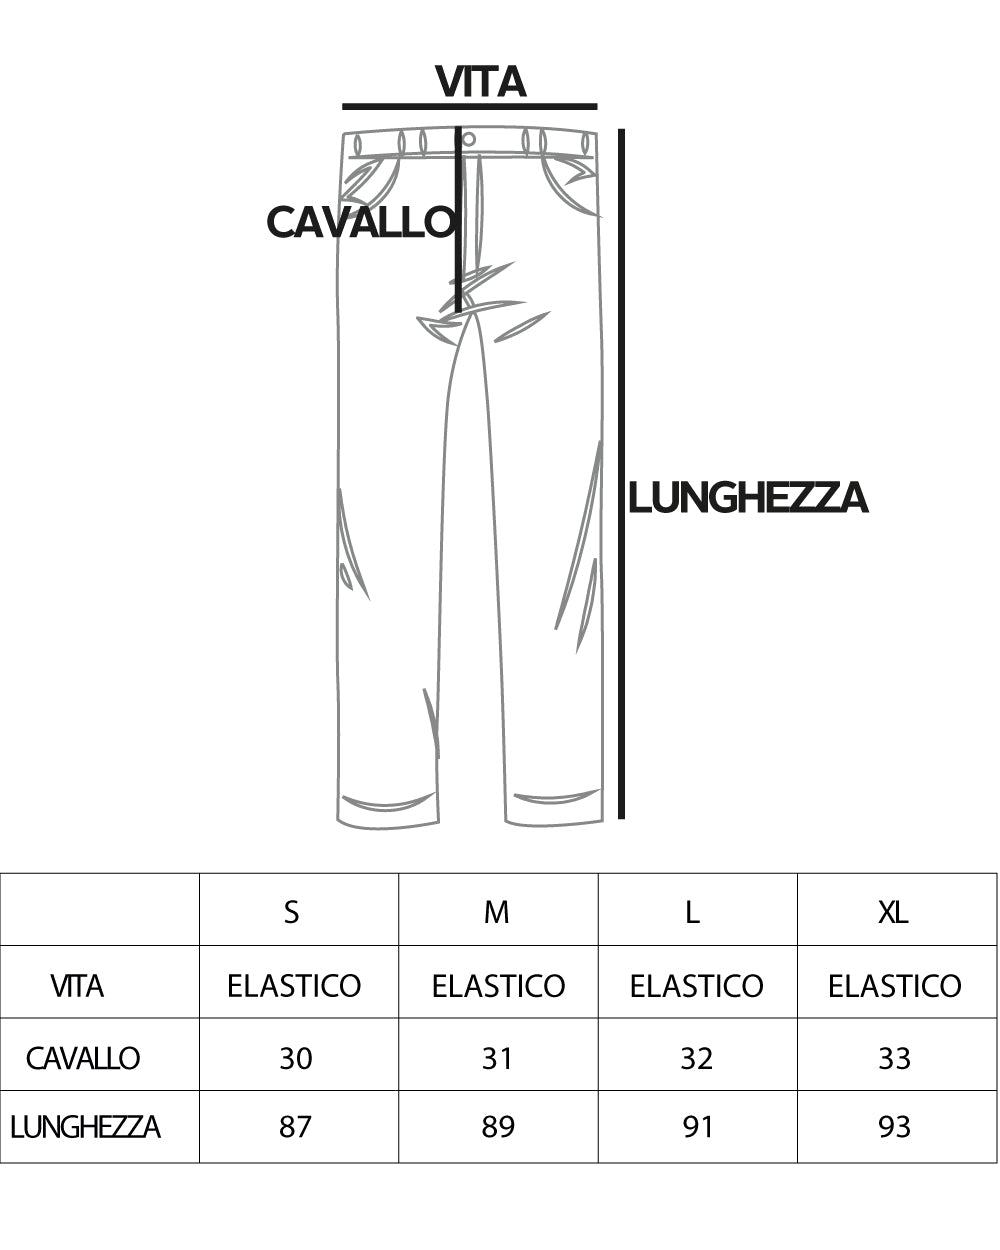 Men's Elastic Striped Trousers Drawstring Pattern Stripes American Pocket Casual Blue GIOSAL-P5845A